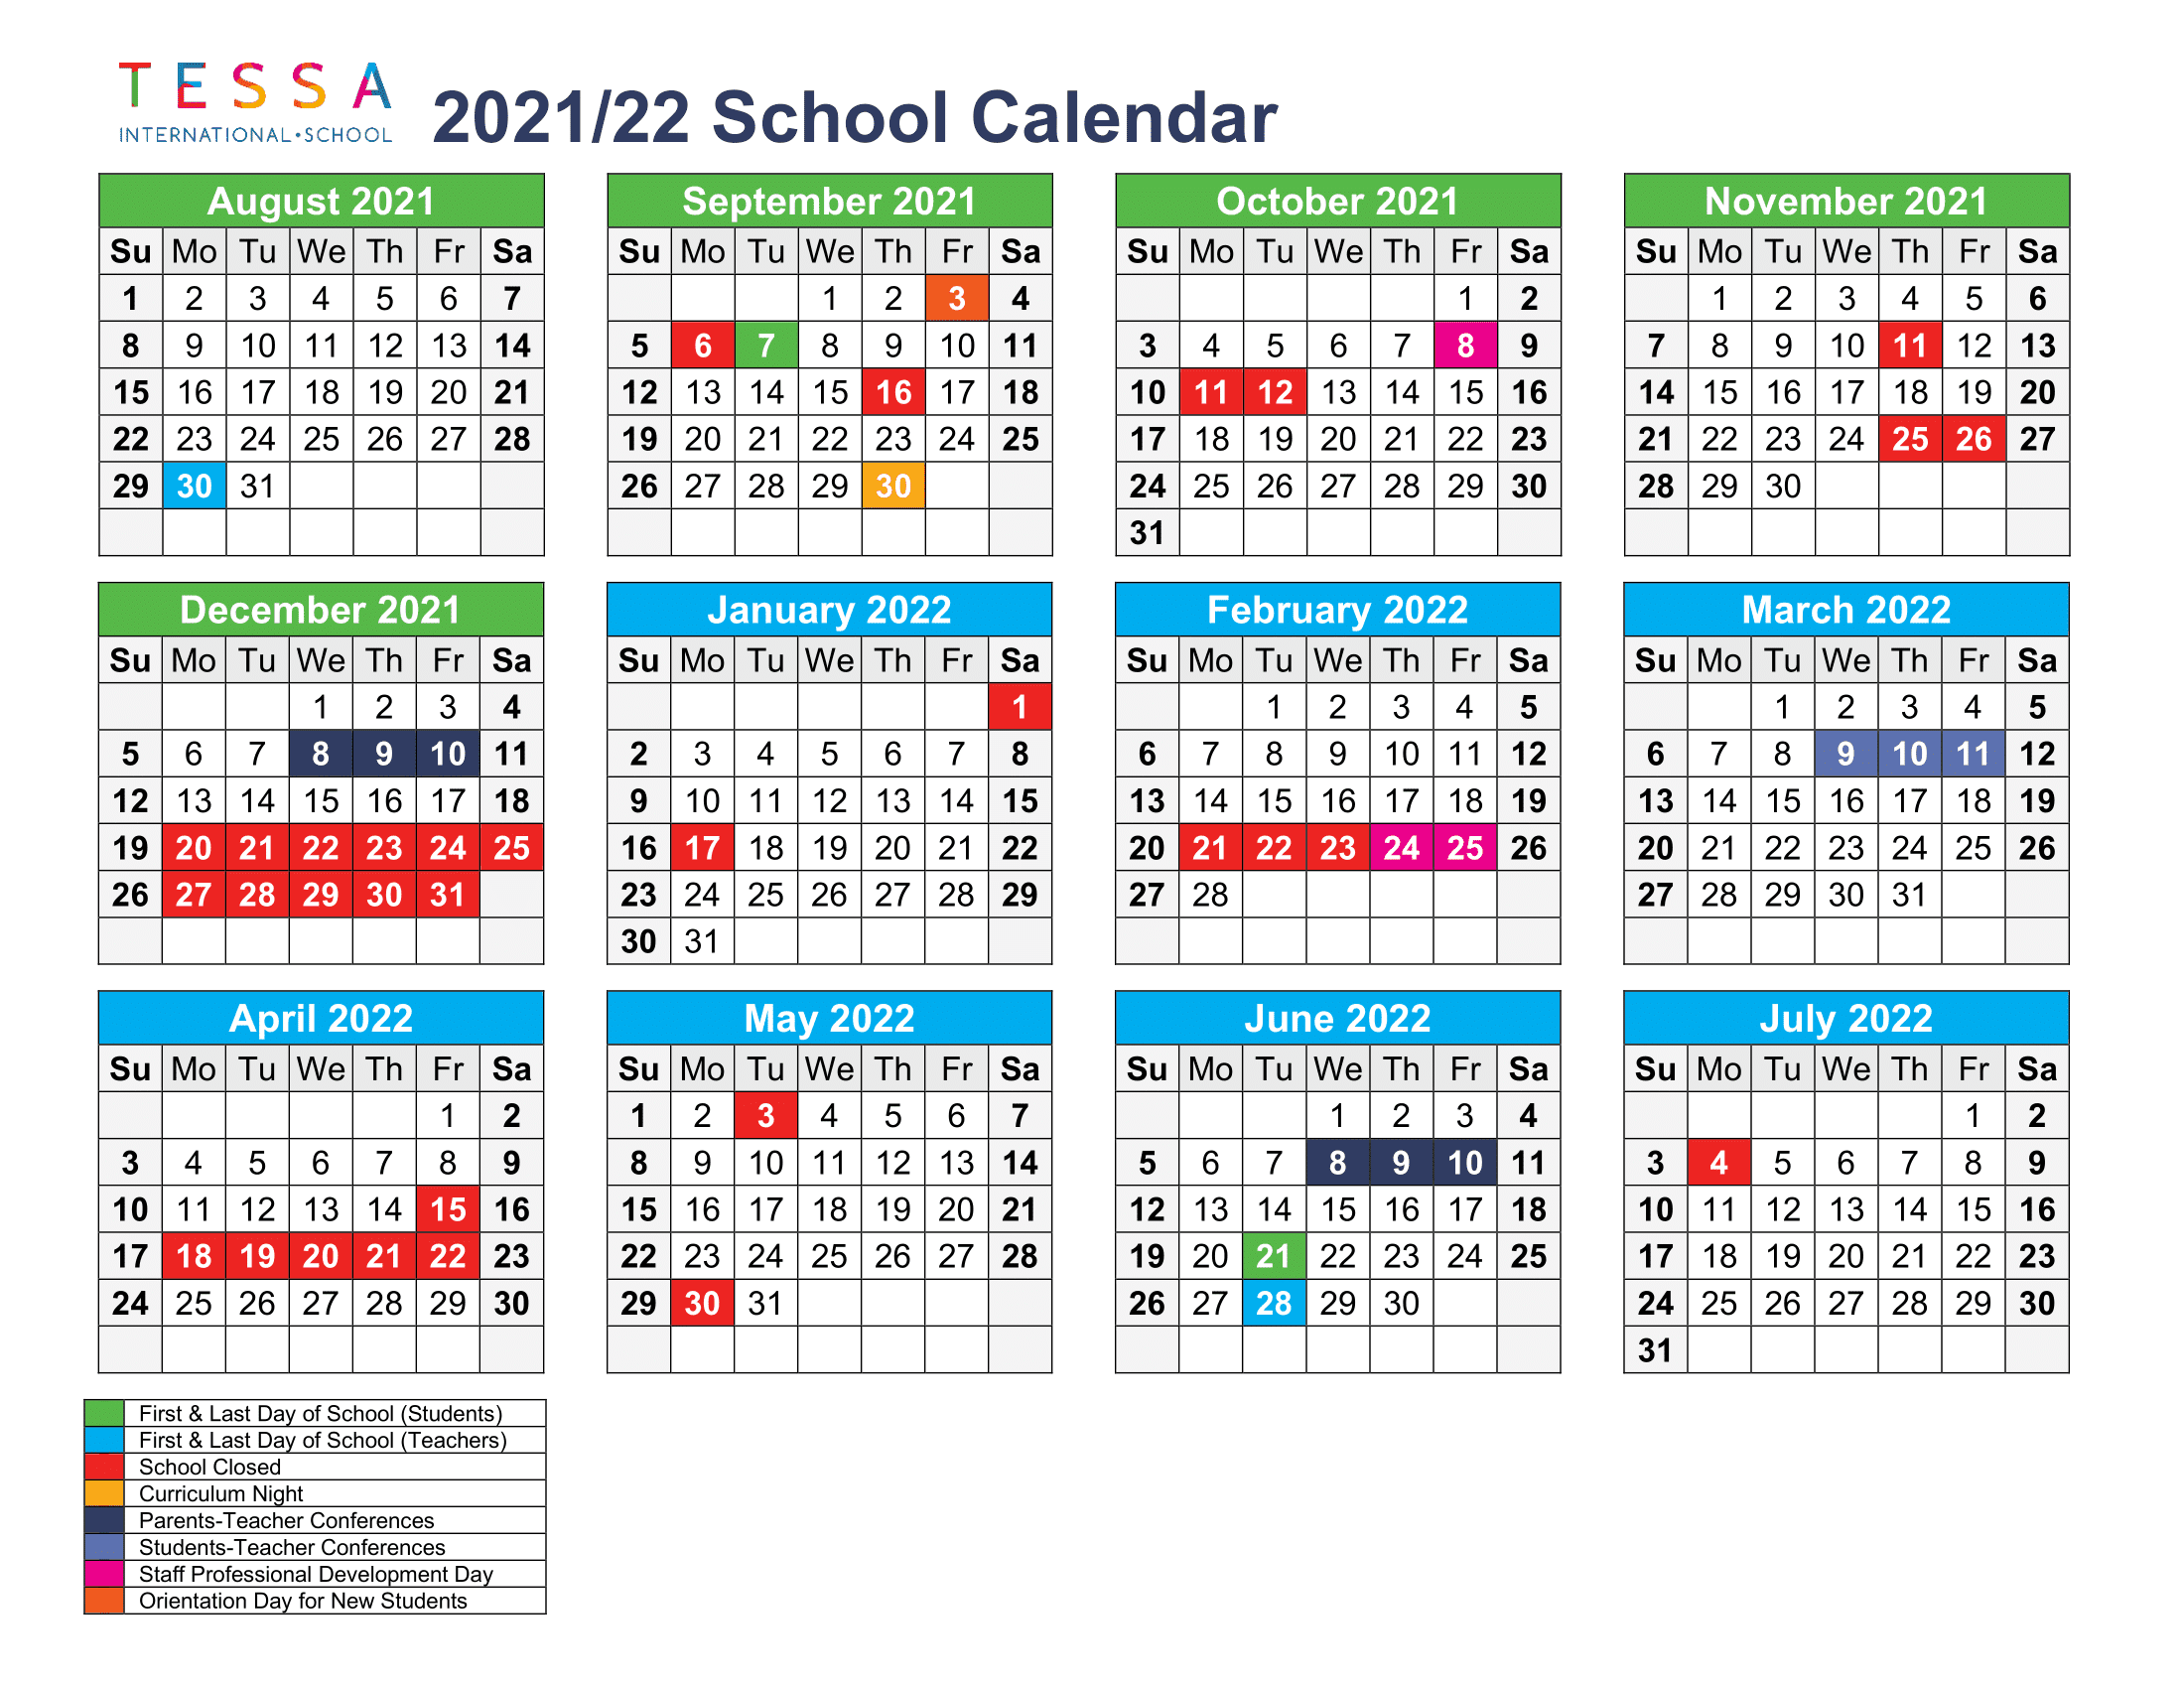 Hofstra Academic Calendar 2022 Academic-Calendar-2021-2022-1 - Tessa International School